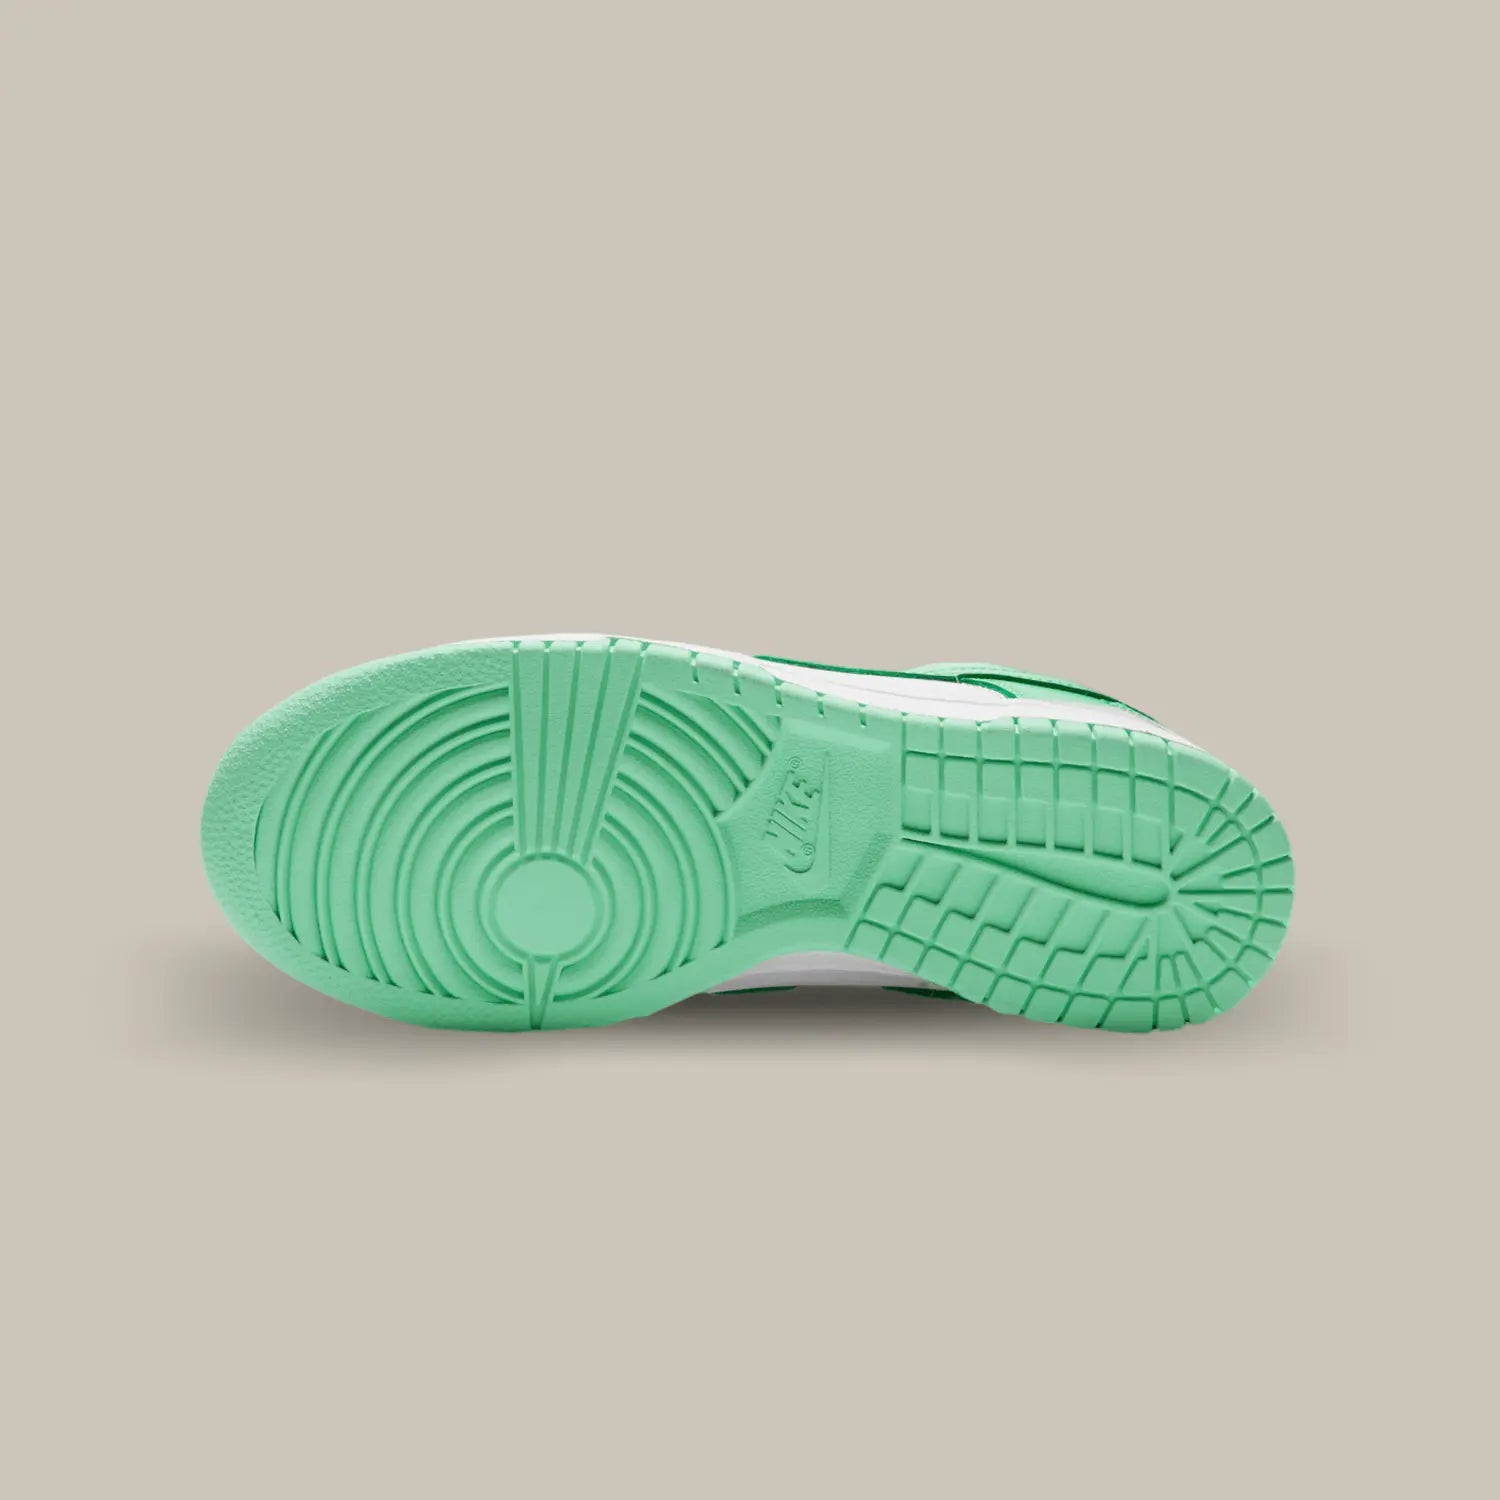 La semelle de la Nike Dunk Low Green Glow de couleur vert menthe.